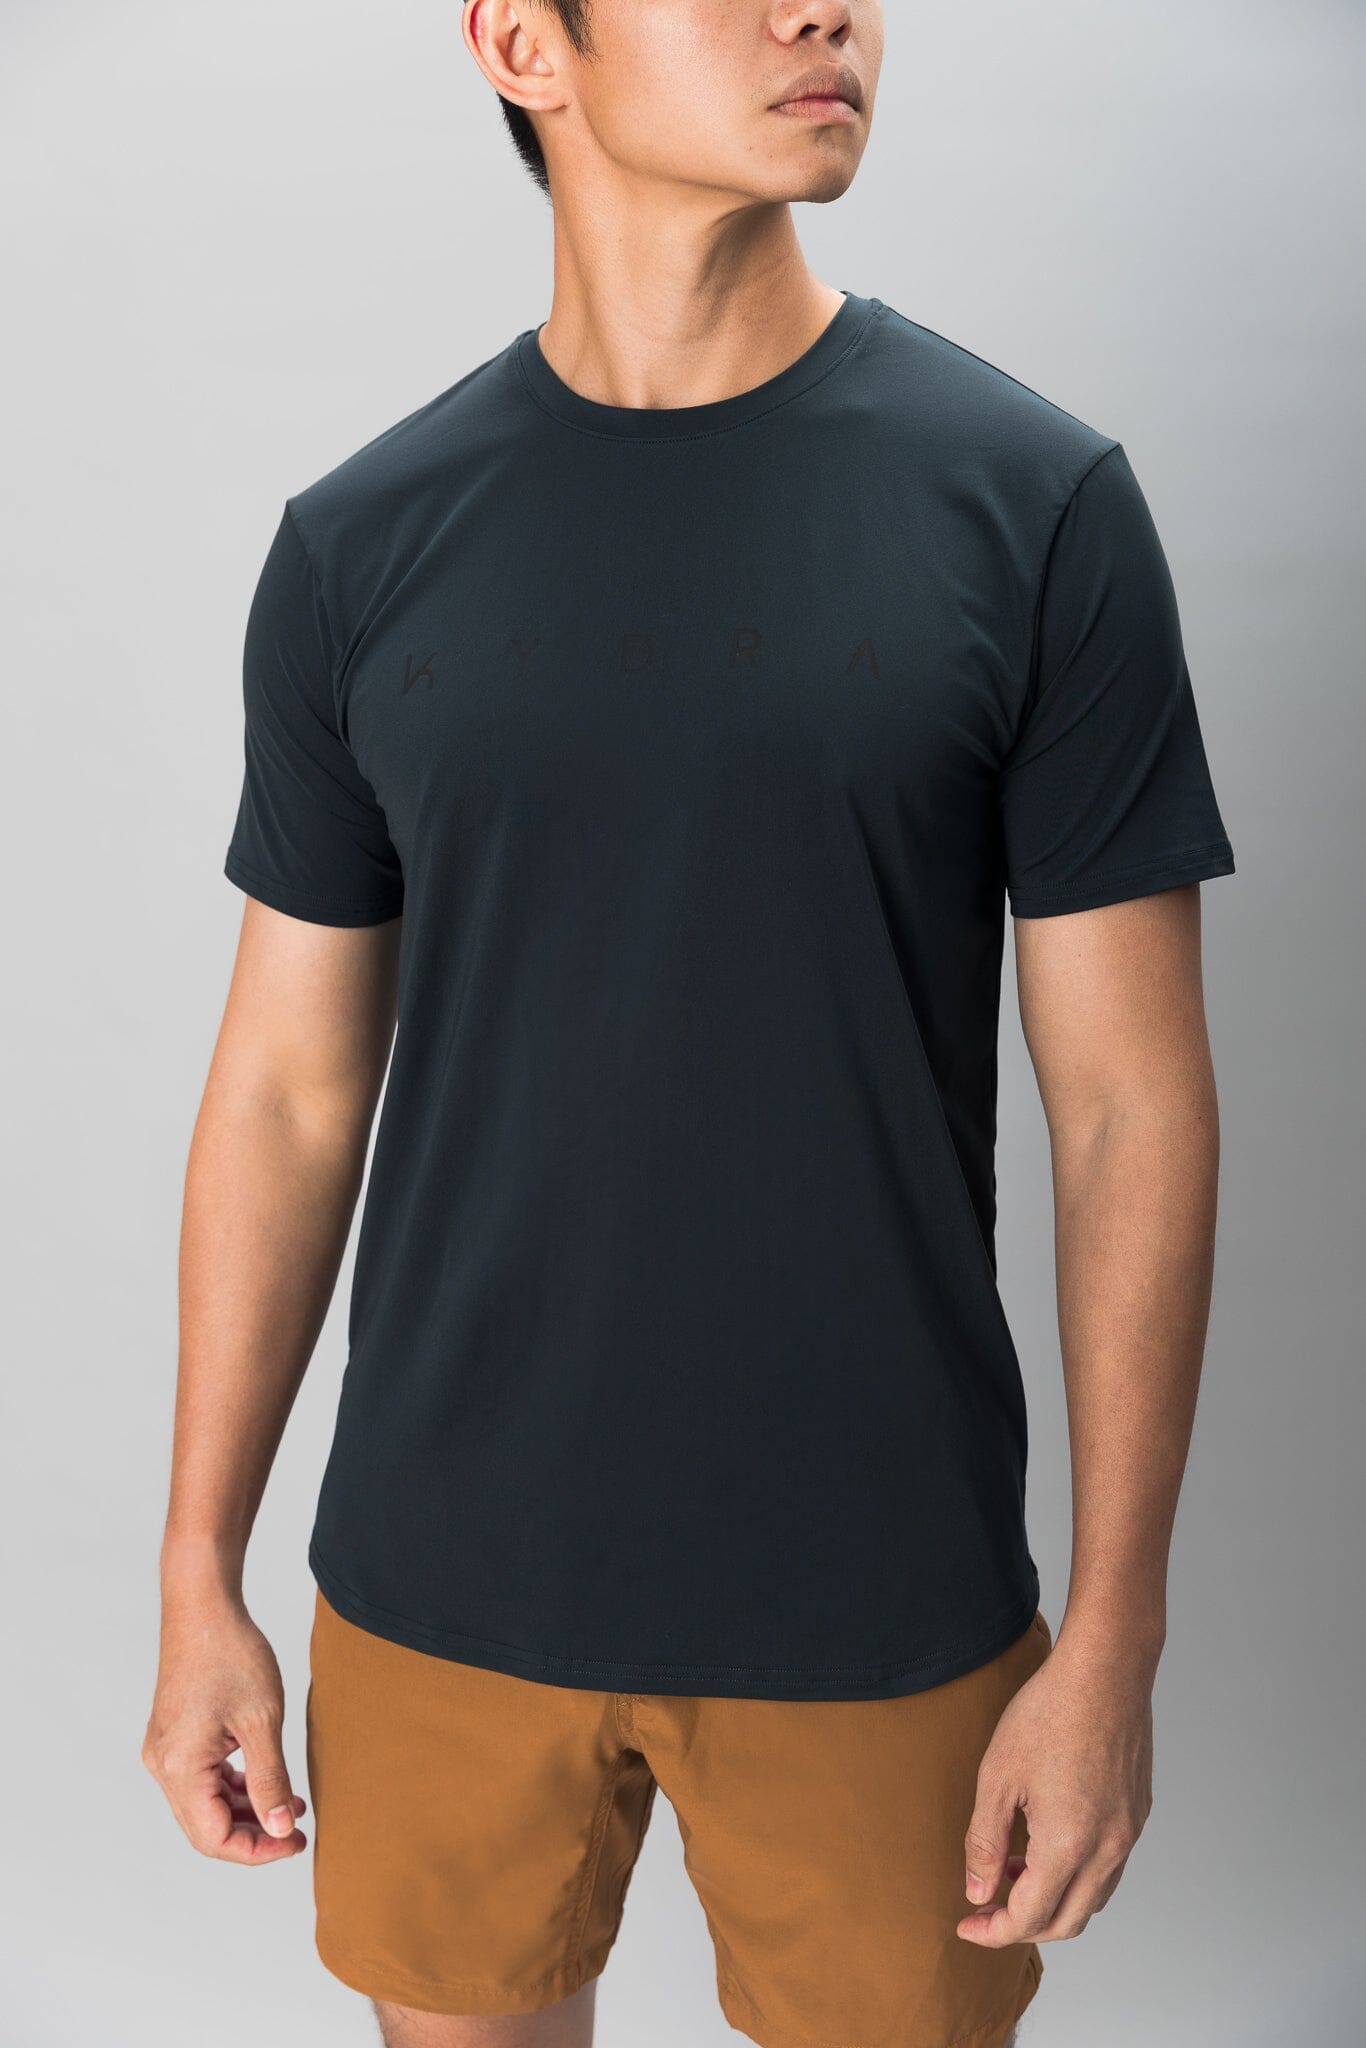 Nitro Tee | KYDRA Activewear Singapore | Men's Running and Gym T-Shirt